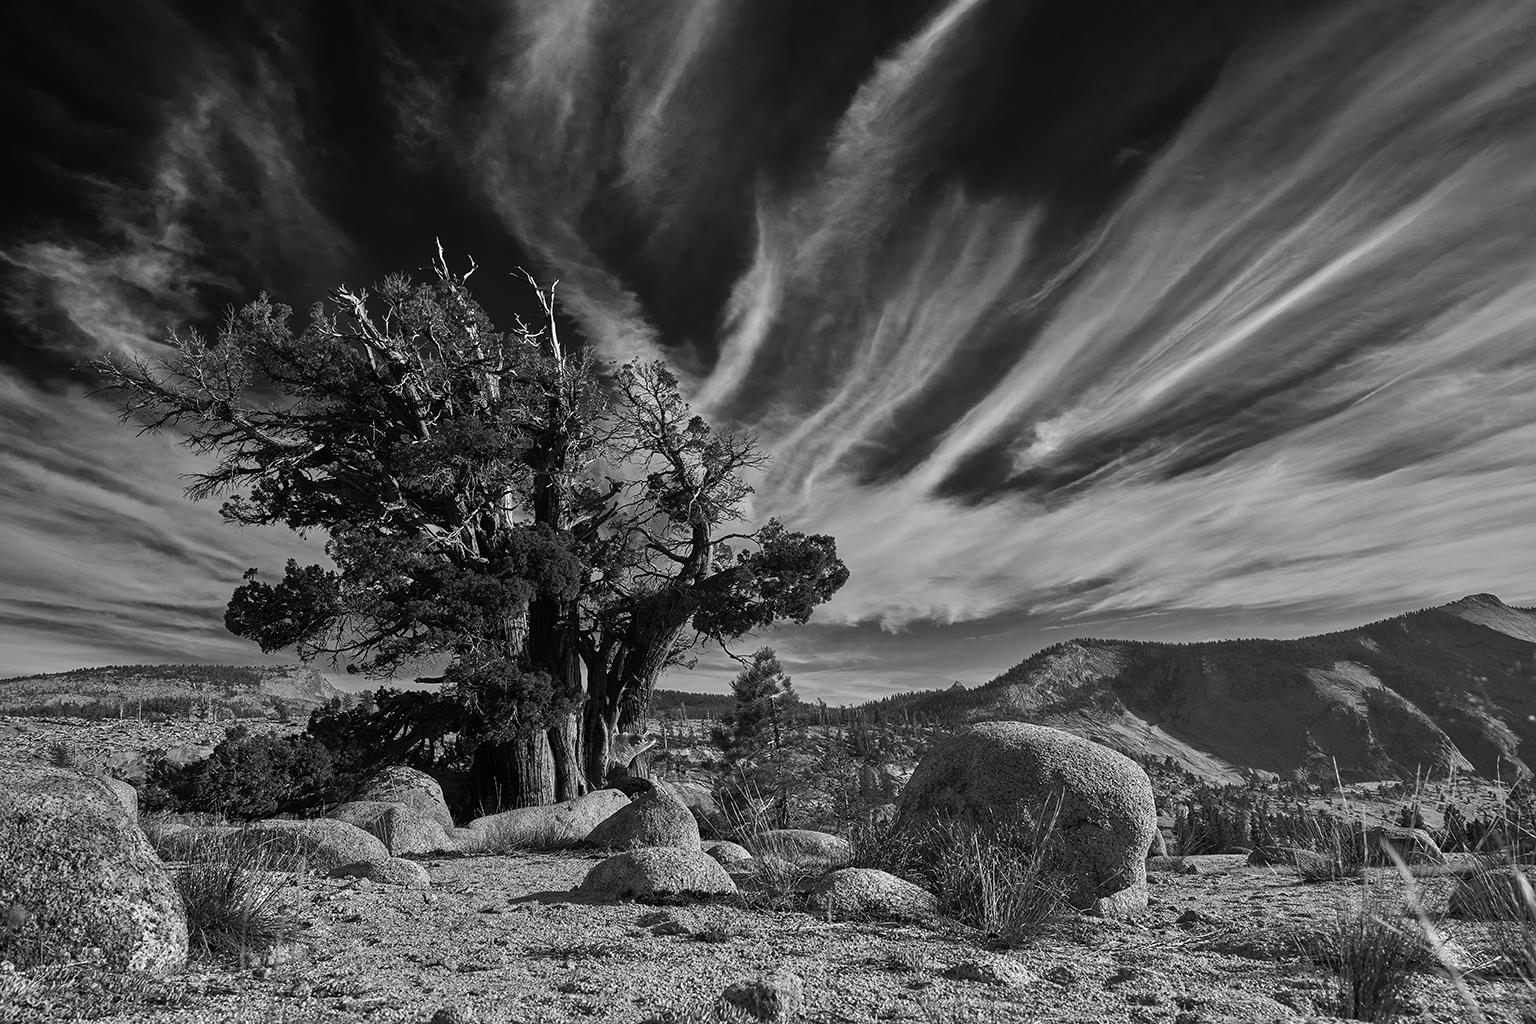 Frank Schott Landscape Print - Tree Study III - large scale photograph of dramatic mountain landscape